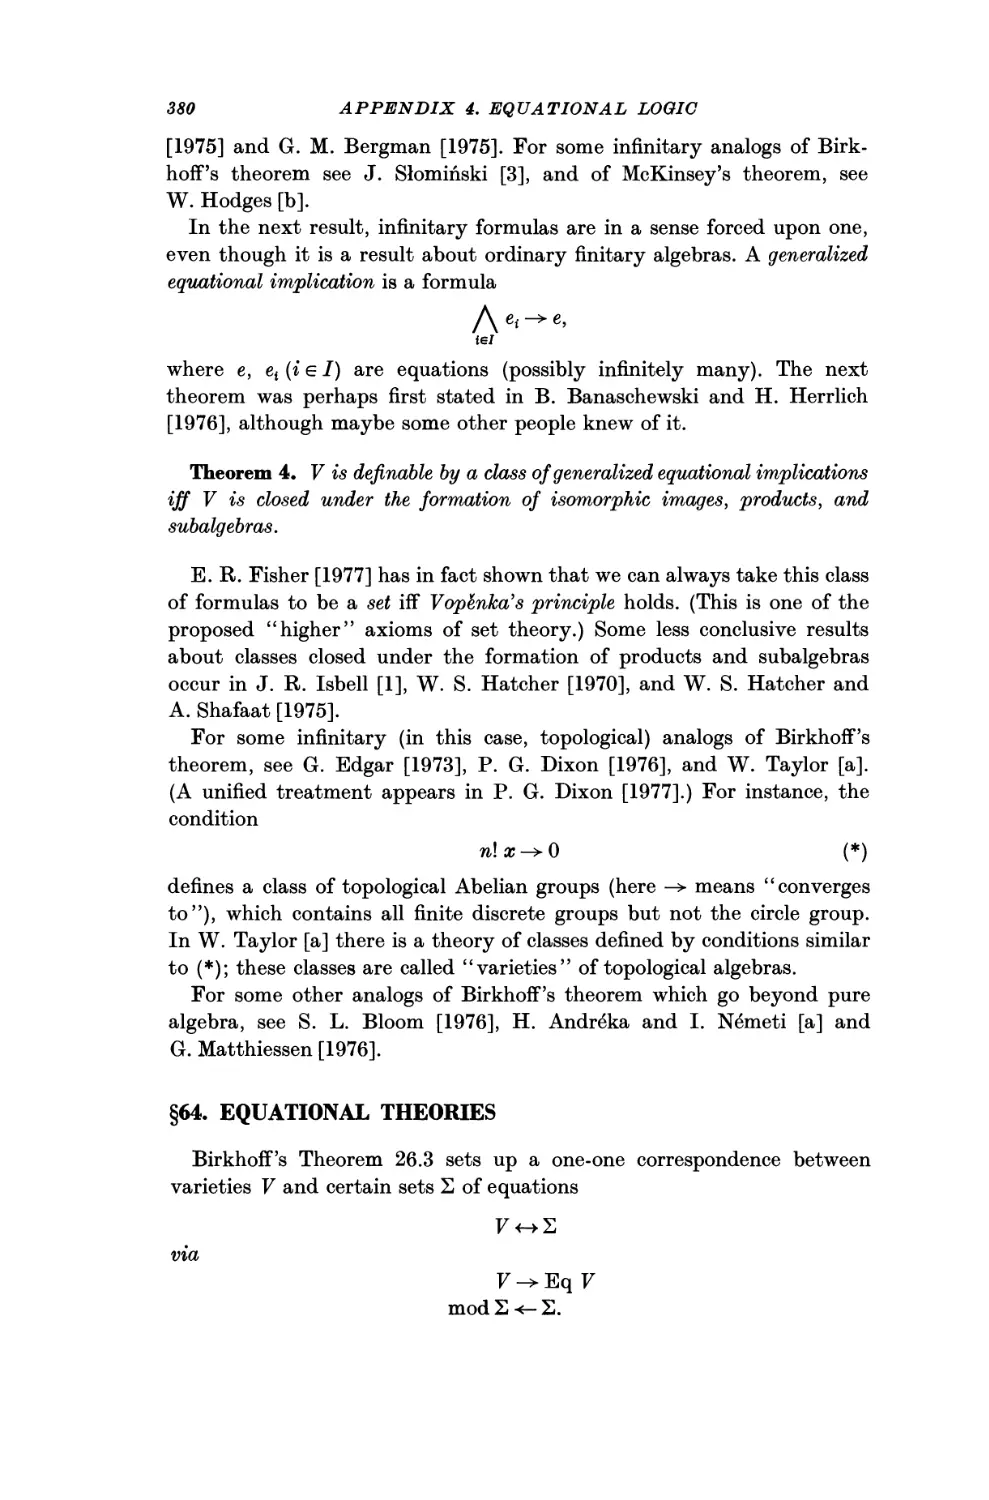 §64. Equational Theories